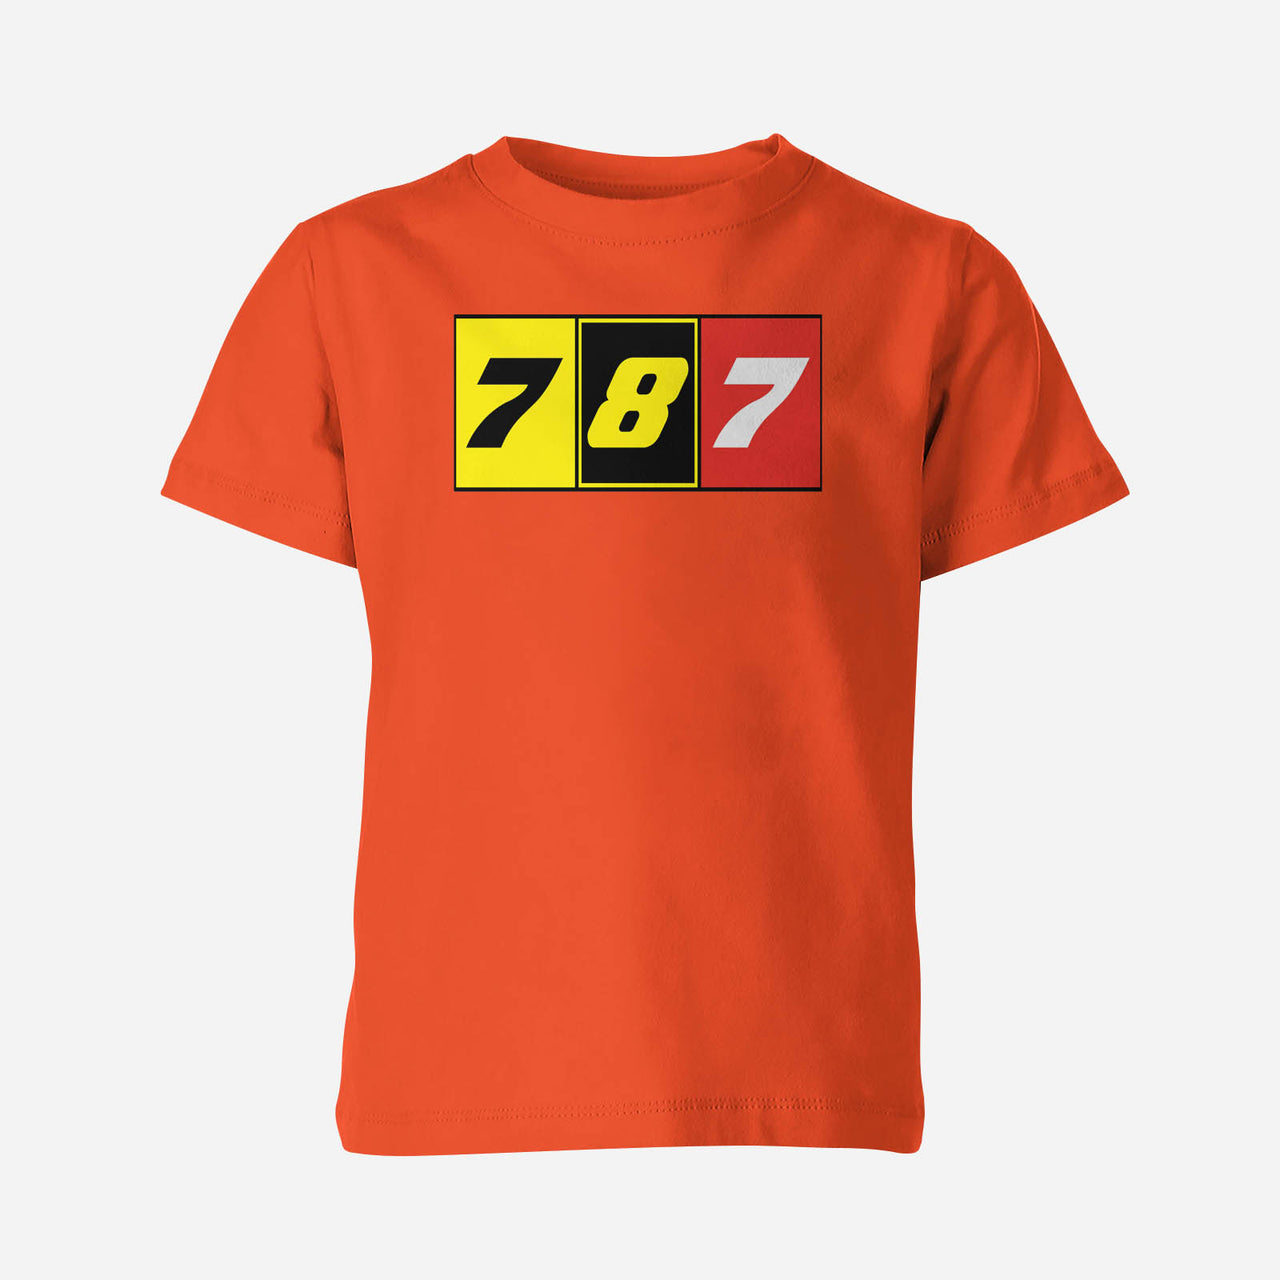 Flat Colourful 787 Designed Children T-Shirts